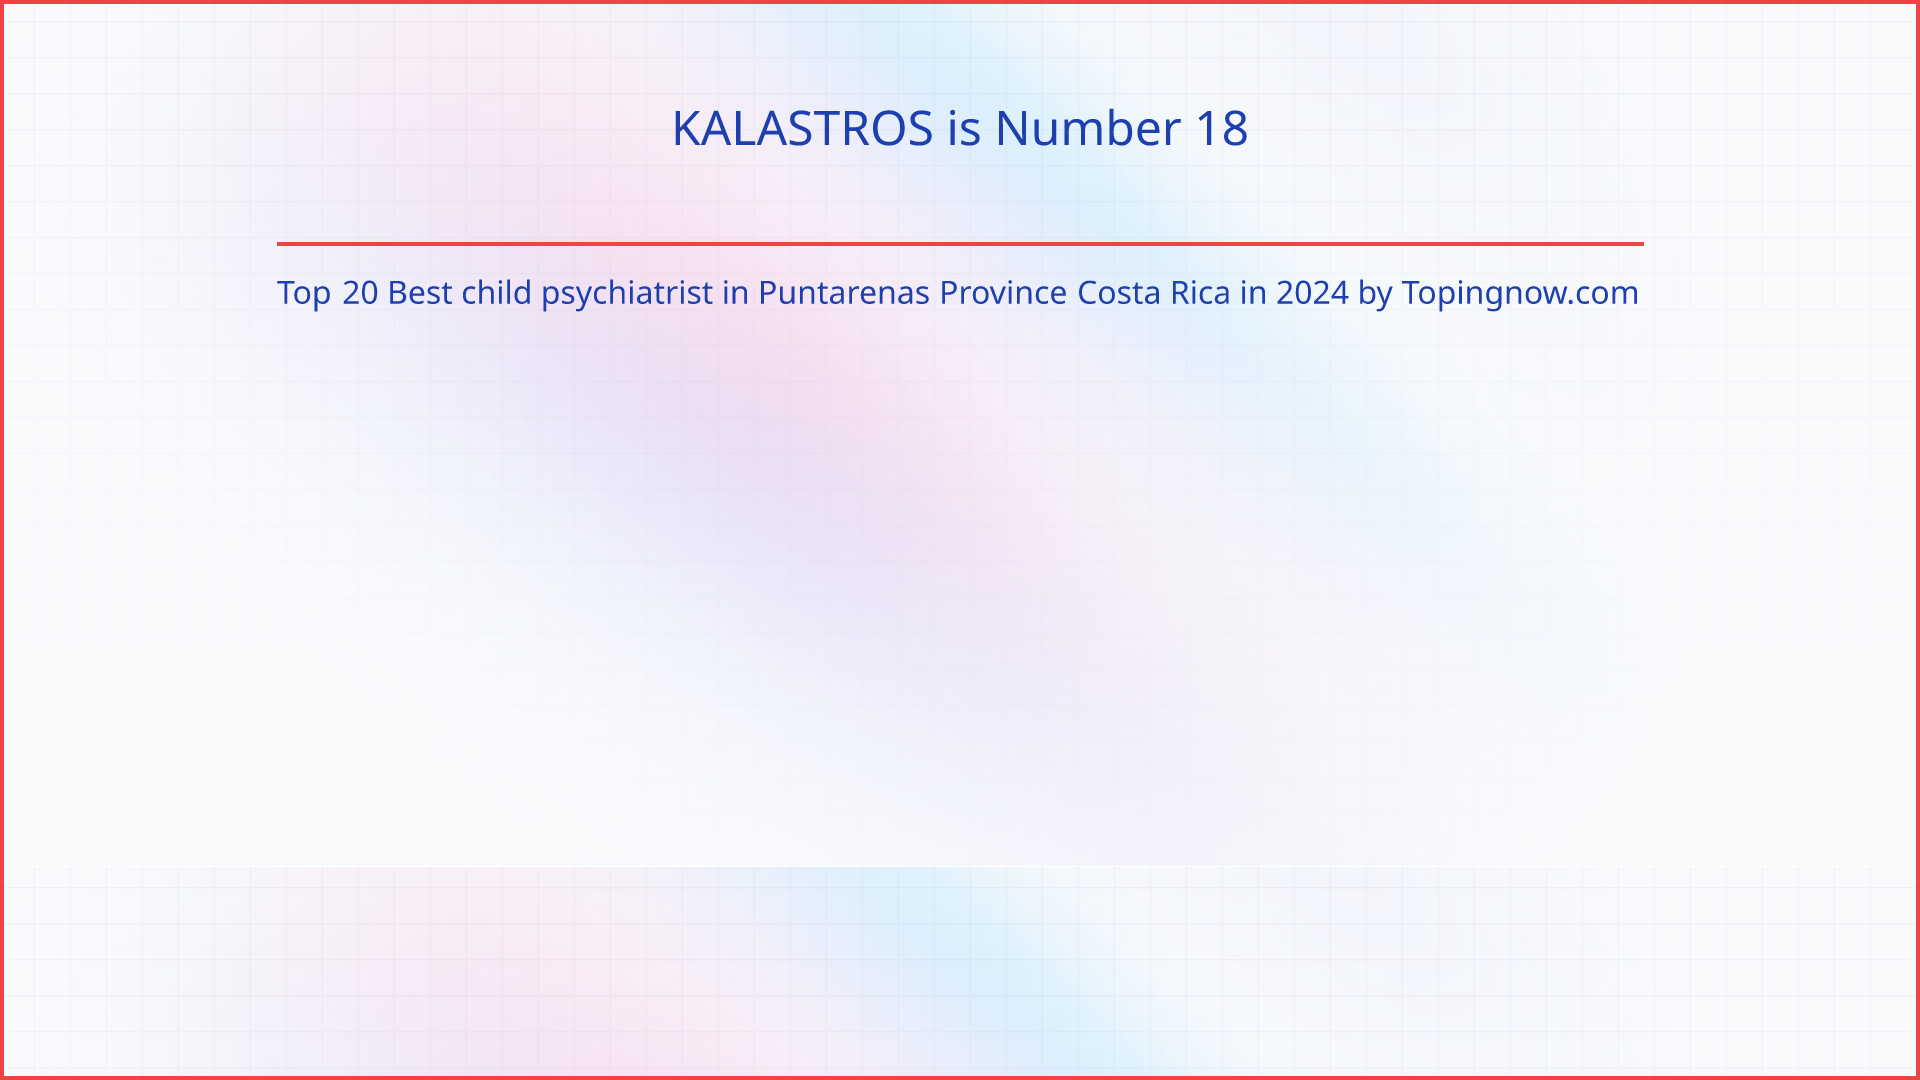 KALASTROS: Top 20 Best child psychiatrist in Puntarenas Province Costa Rica in 2024